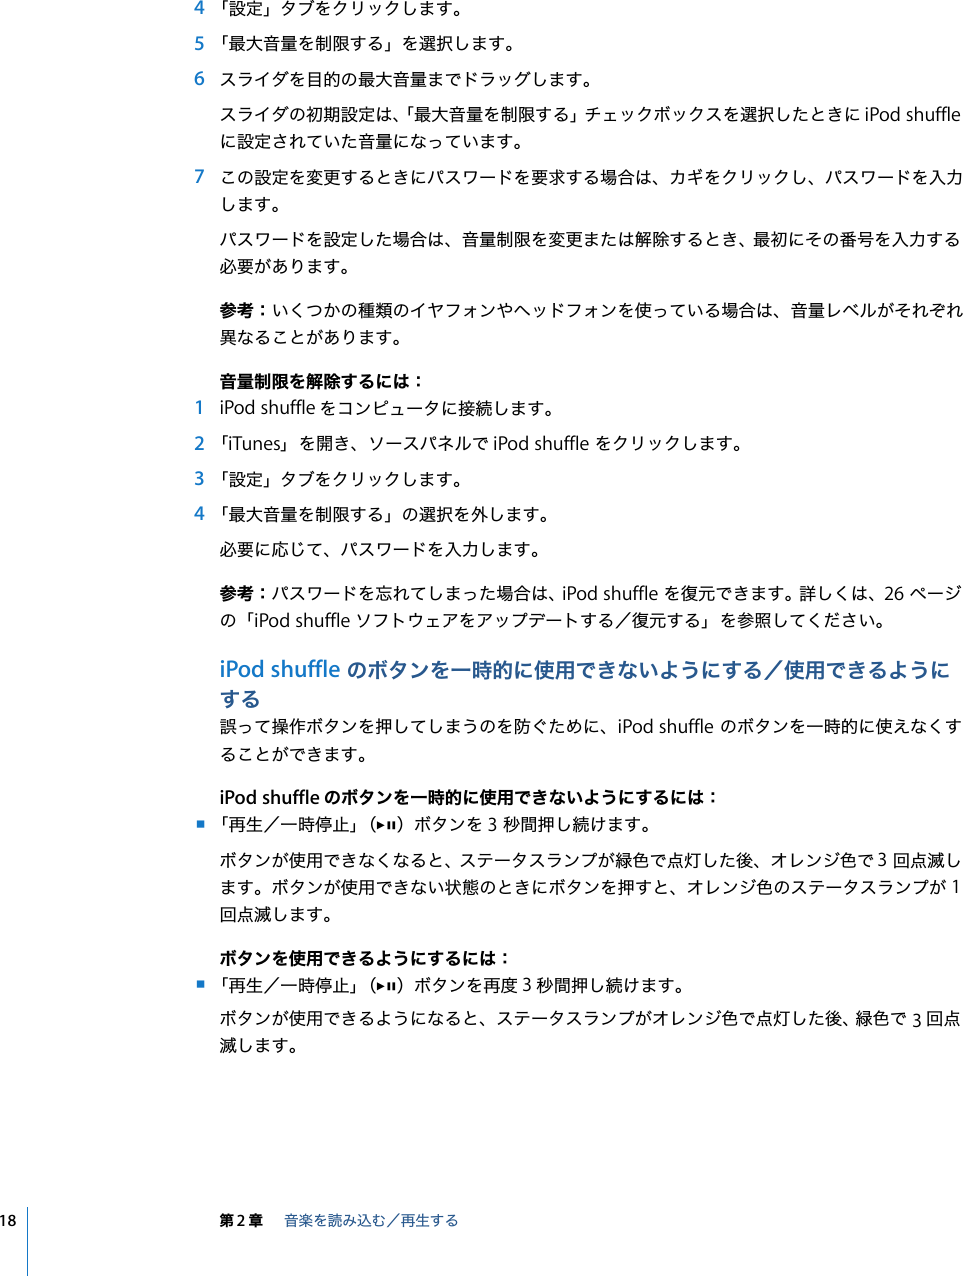 Apple Ipodshuffle 2ndgeneration Ipod Shuffle 機能ガイド User Manual I Podshuffle 第2世代 Pod Features Guide J